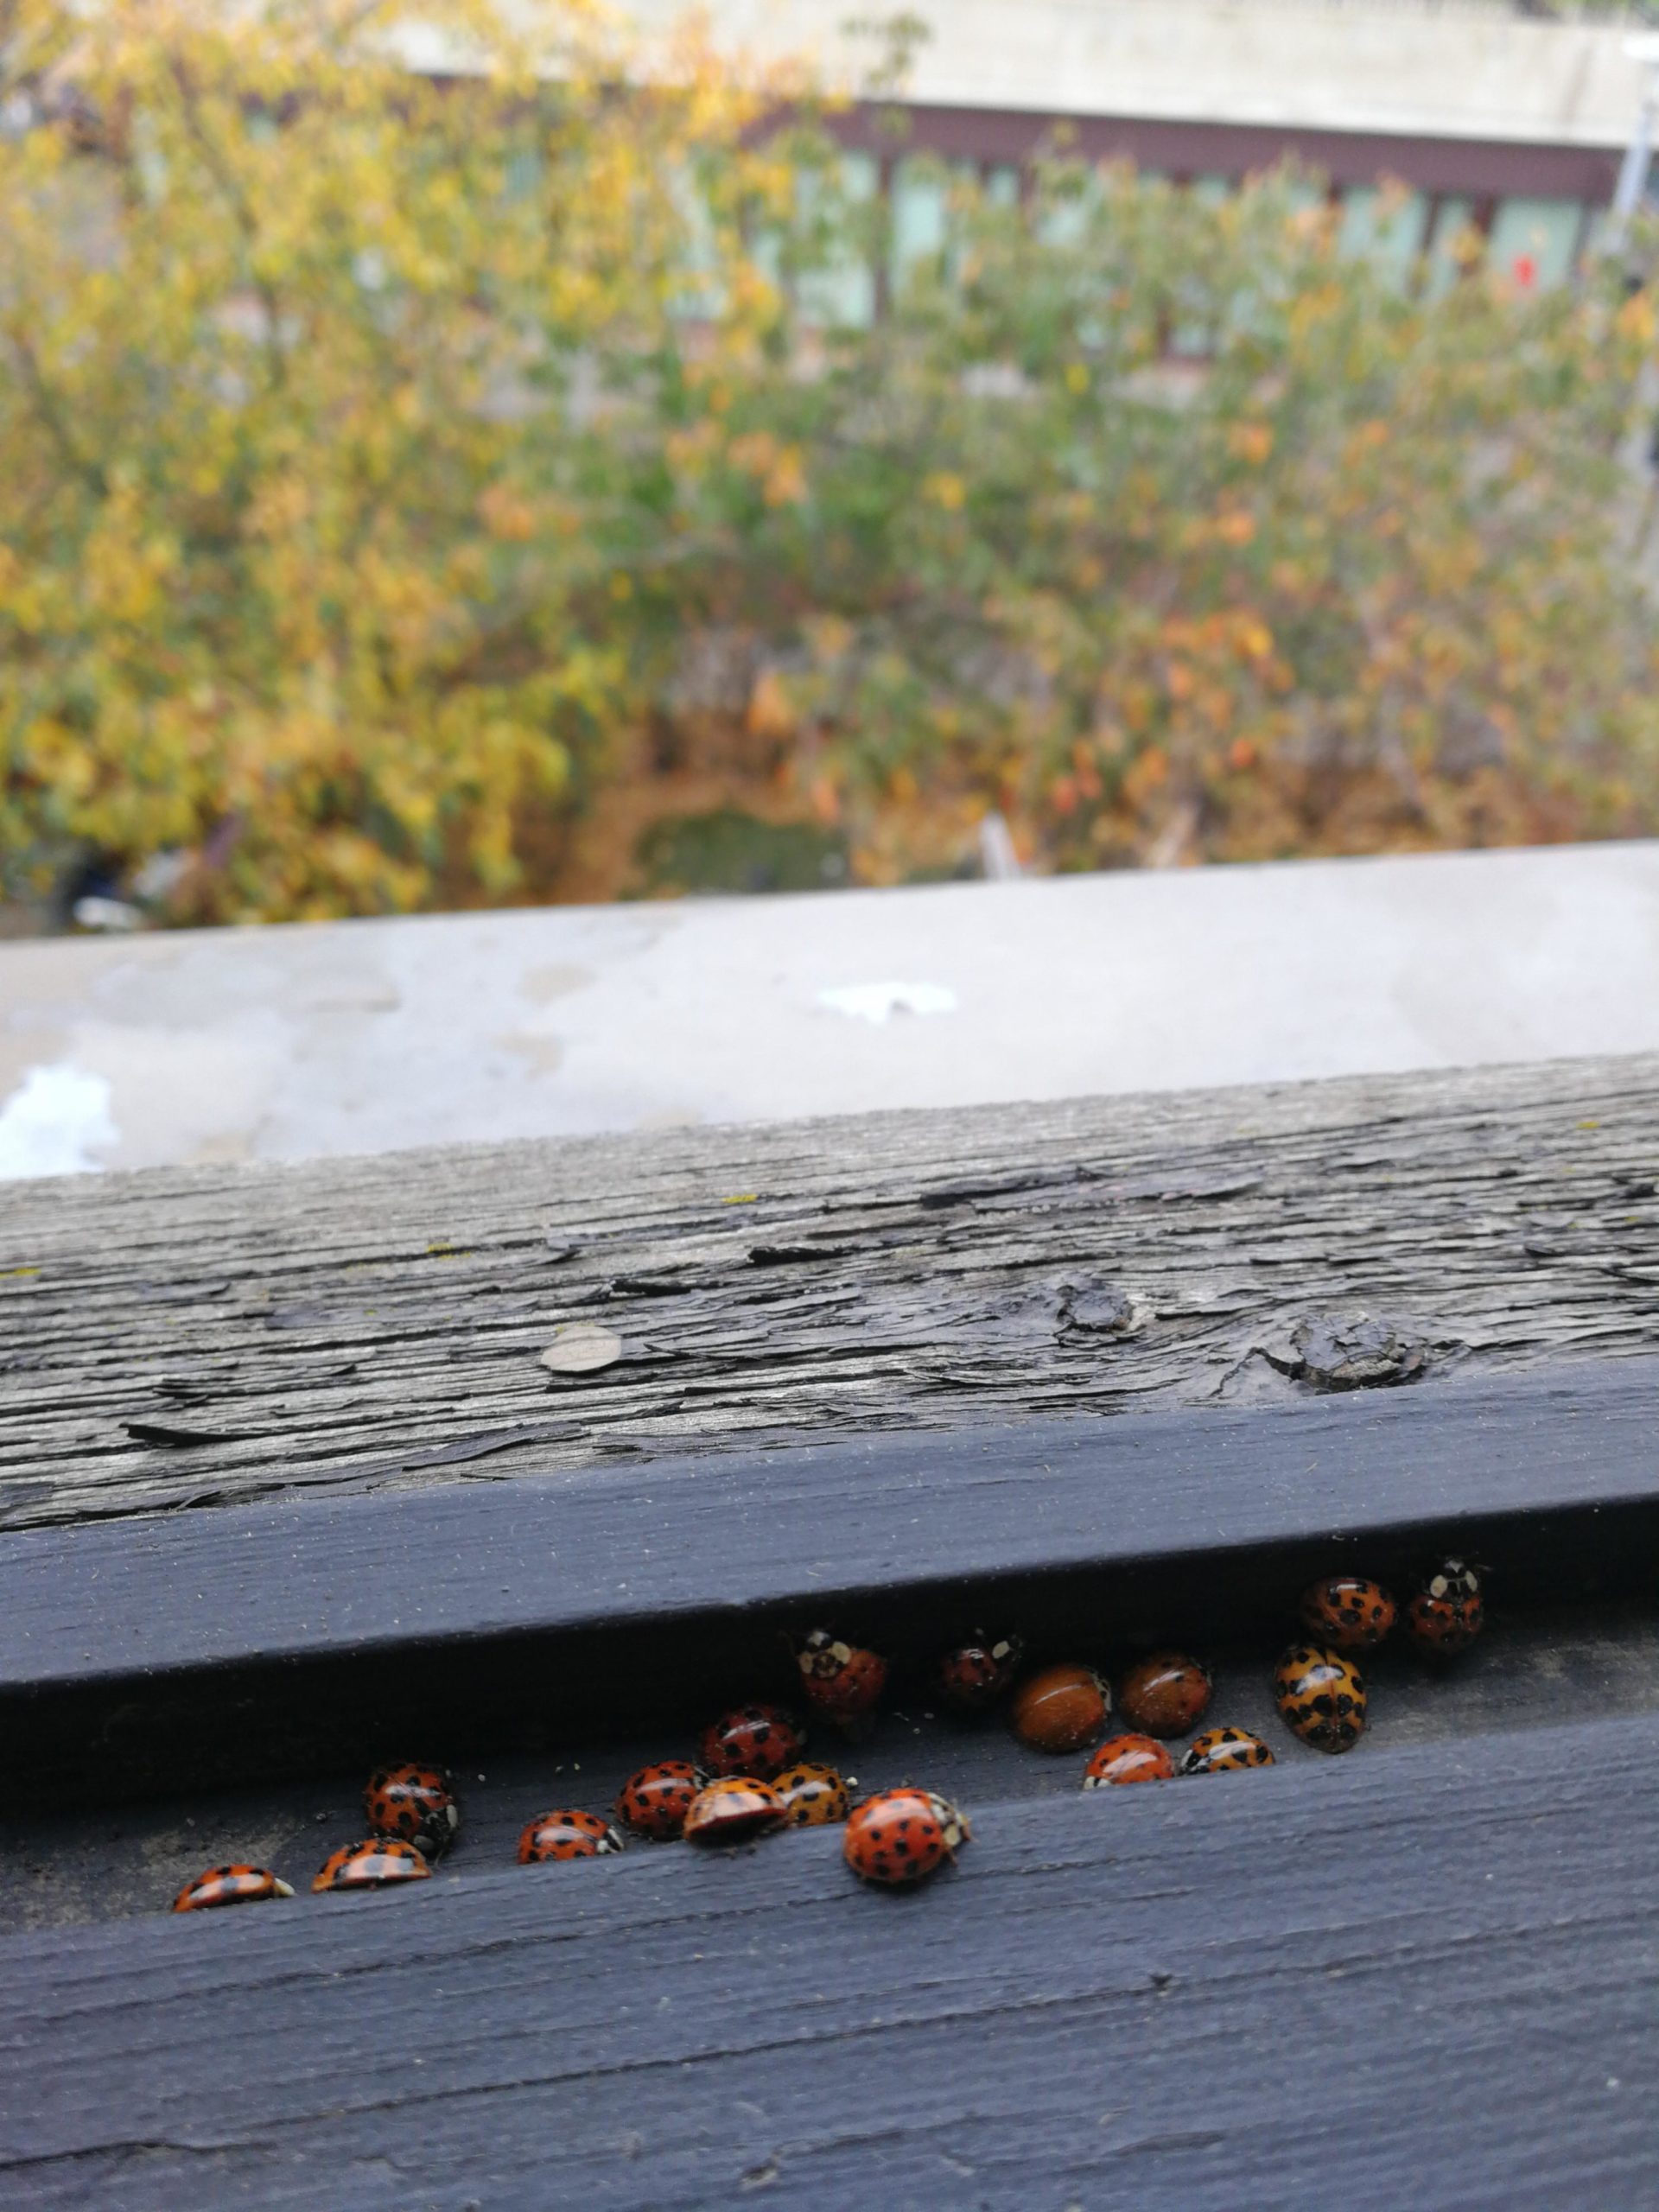 A+colony+of+ladybugs+under+my+window